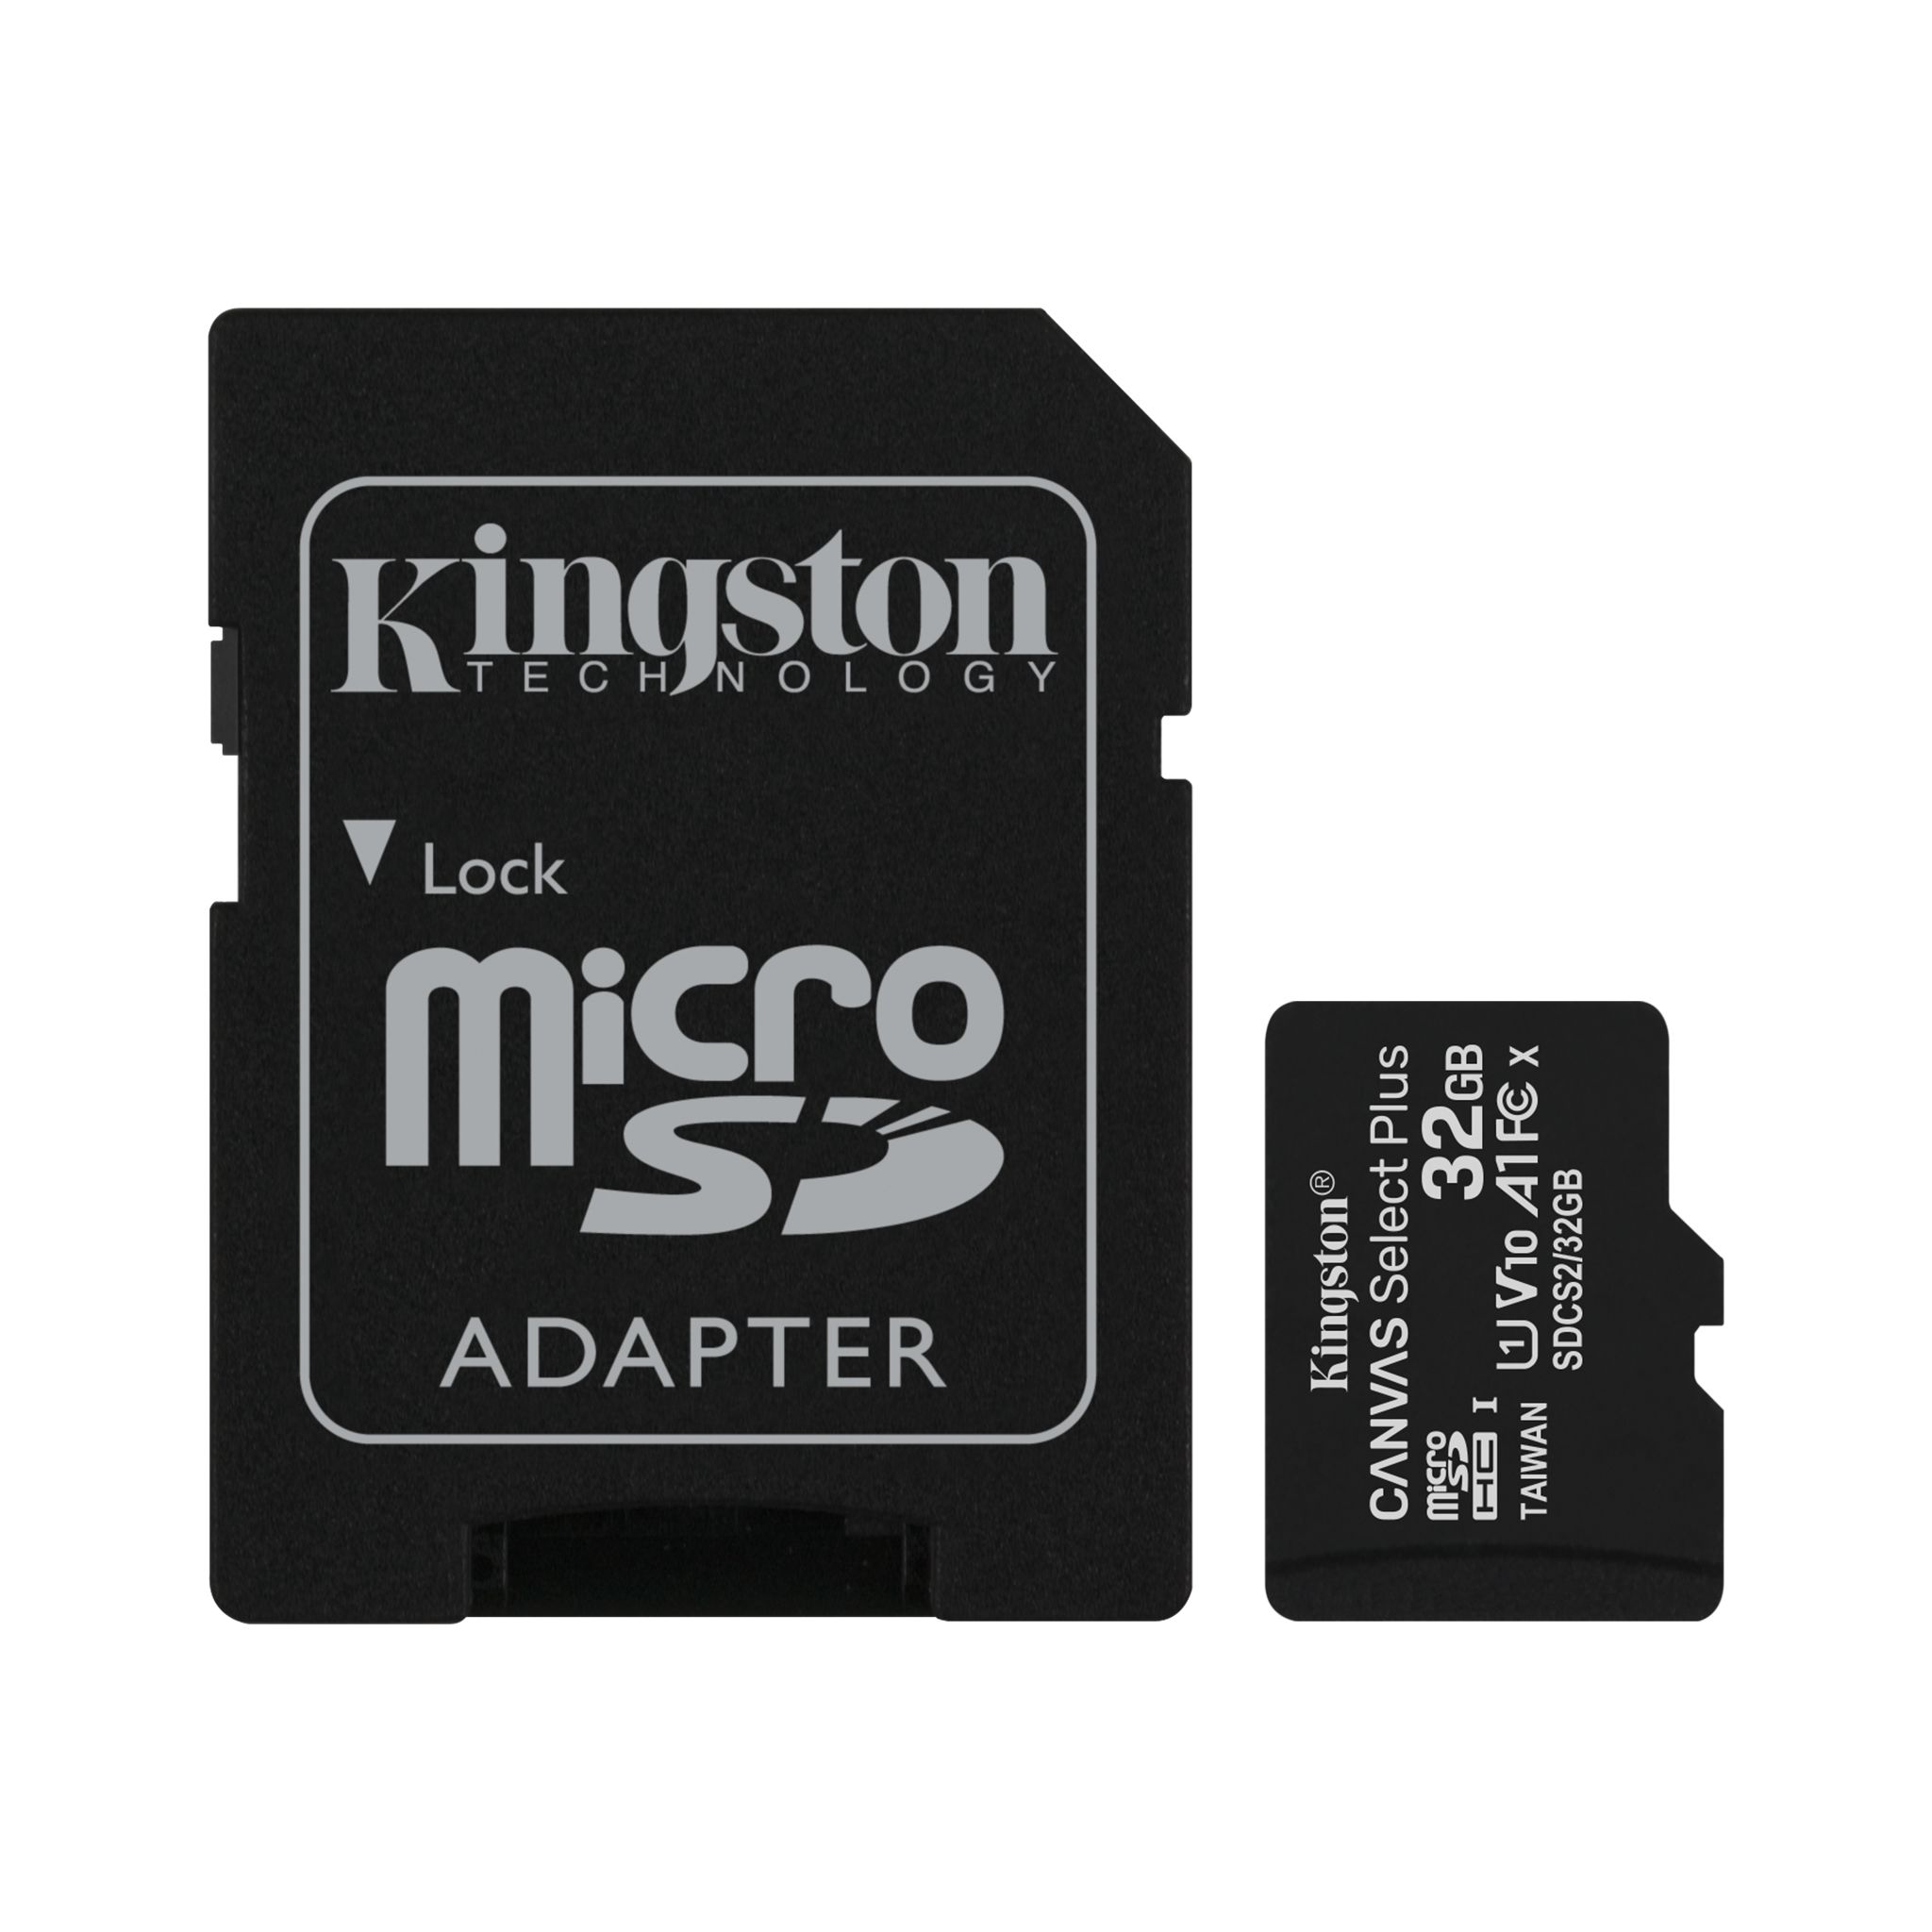 Cartão Kingston Canvas Select Plus MicroSDHC UHS-I A1 32GB